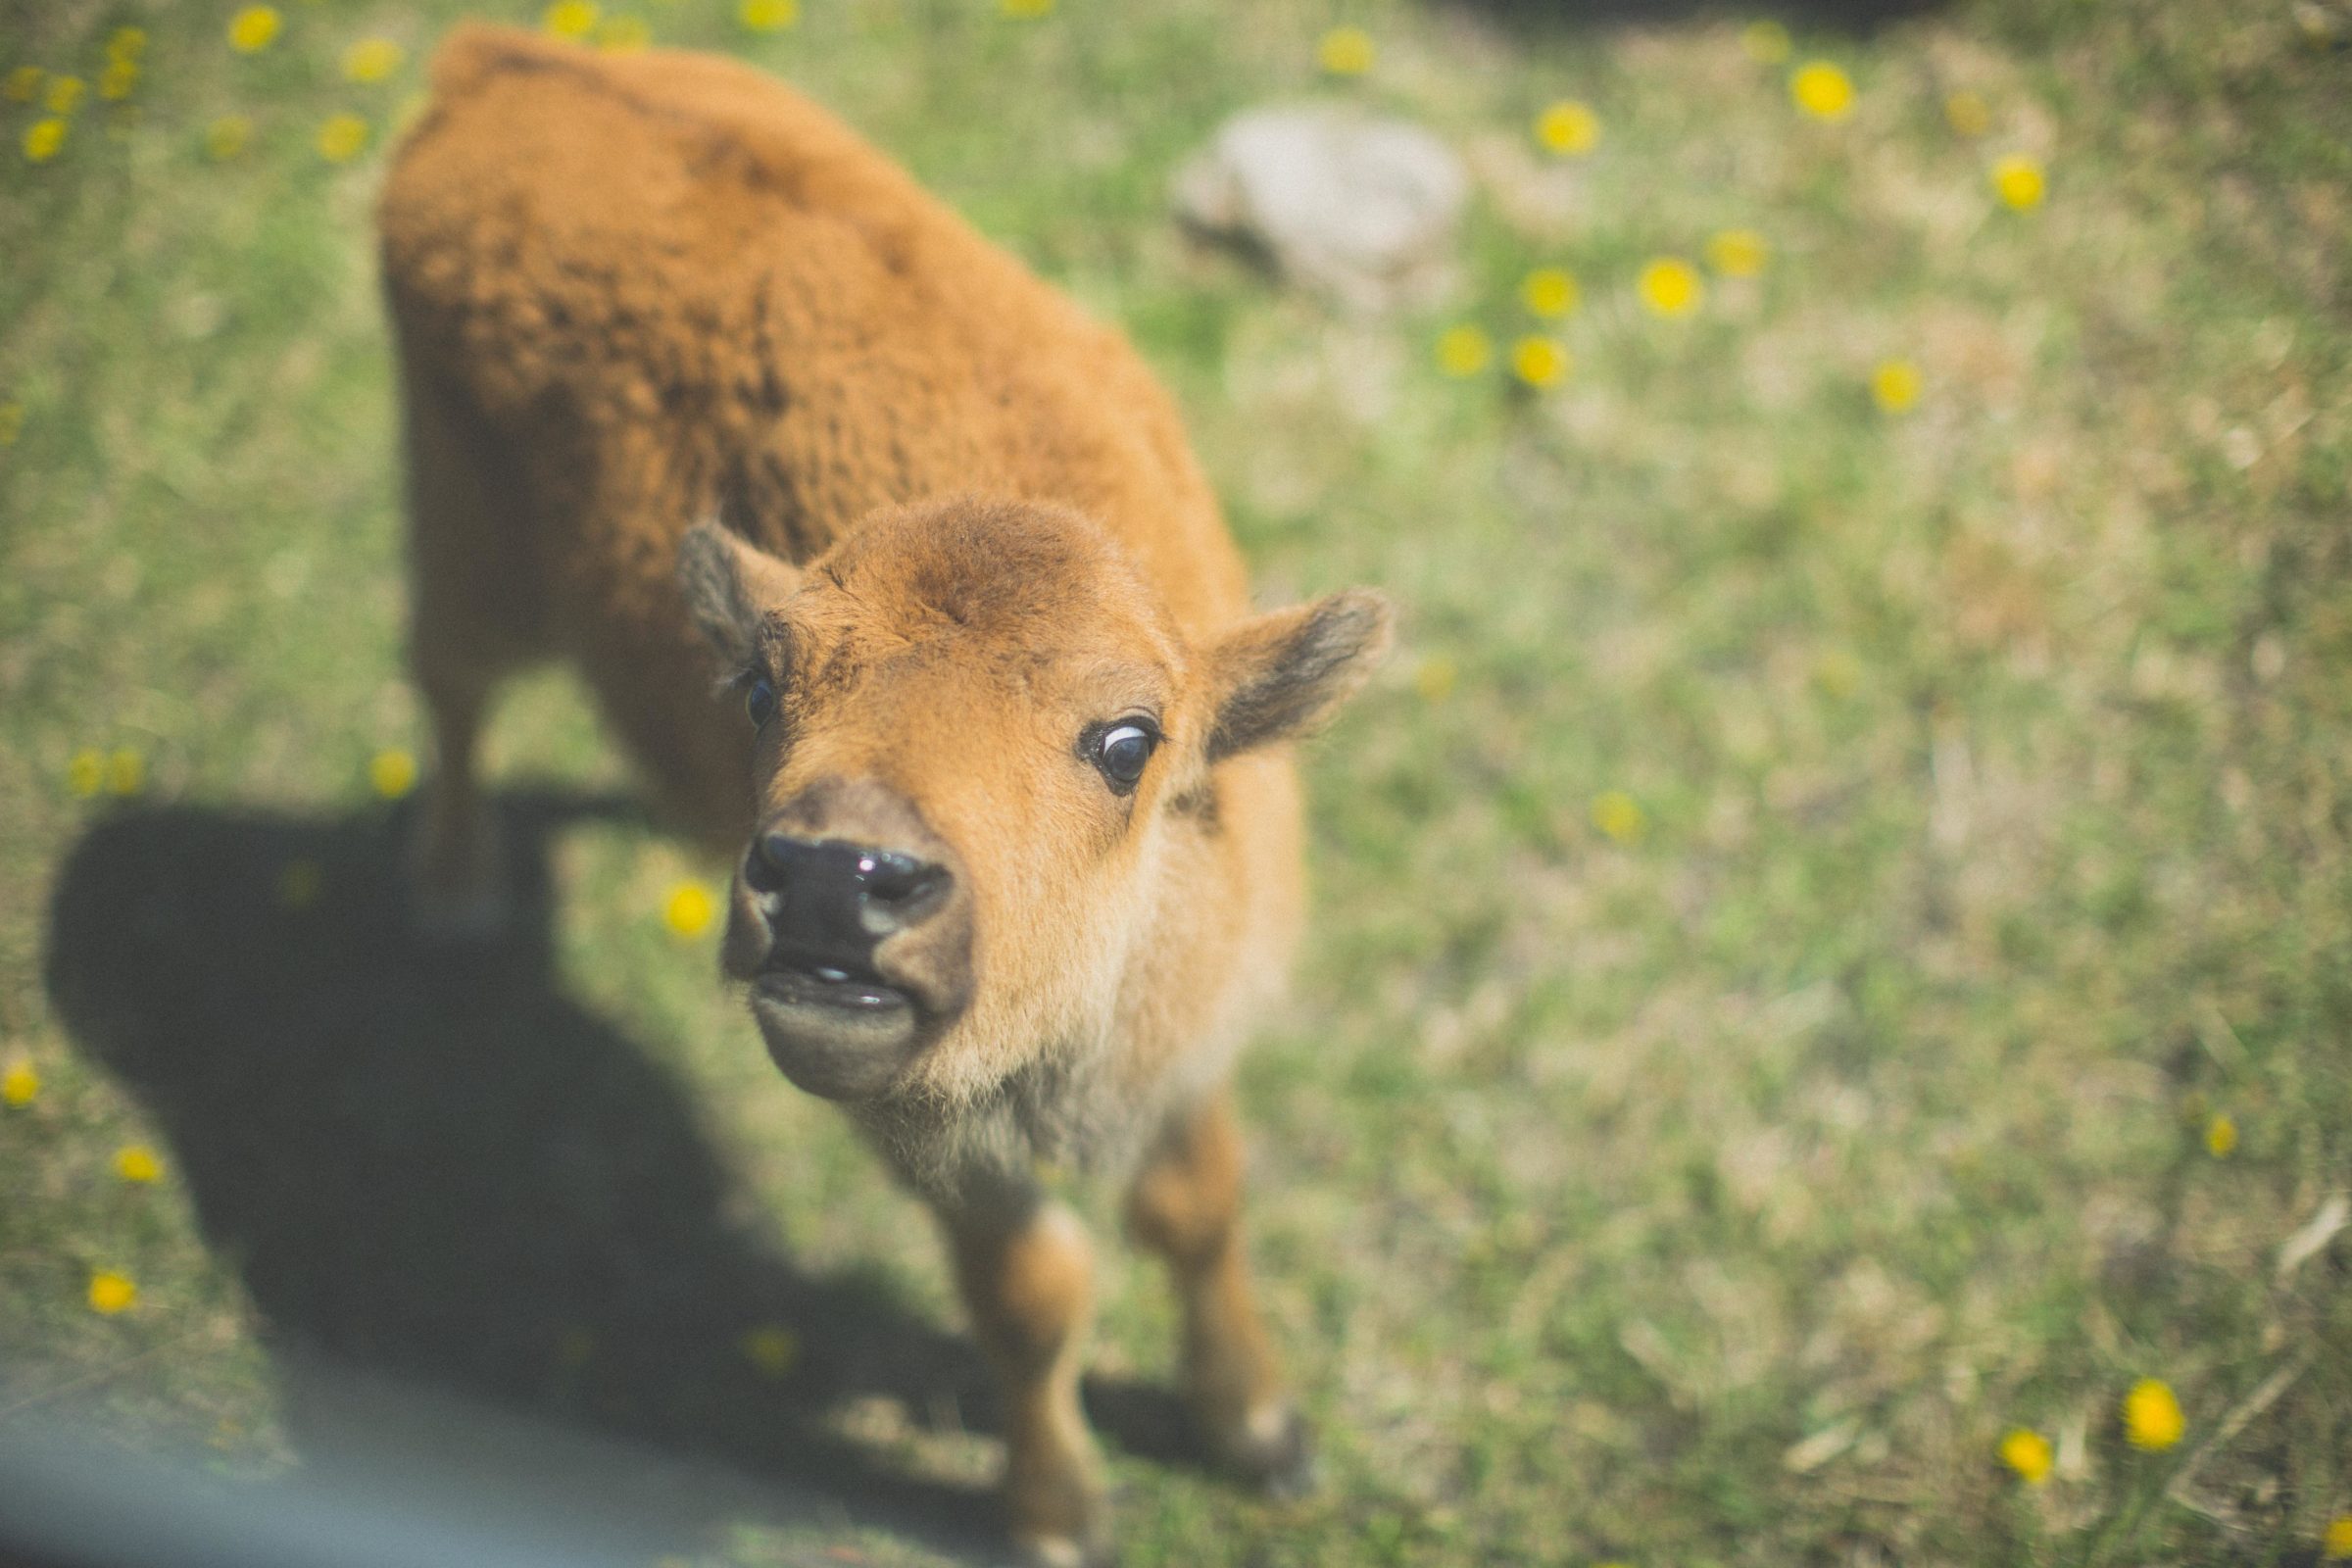 Baby bison calf